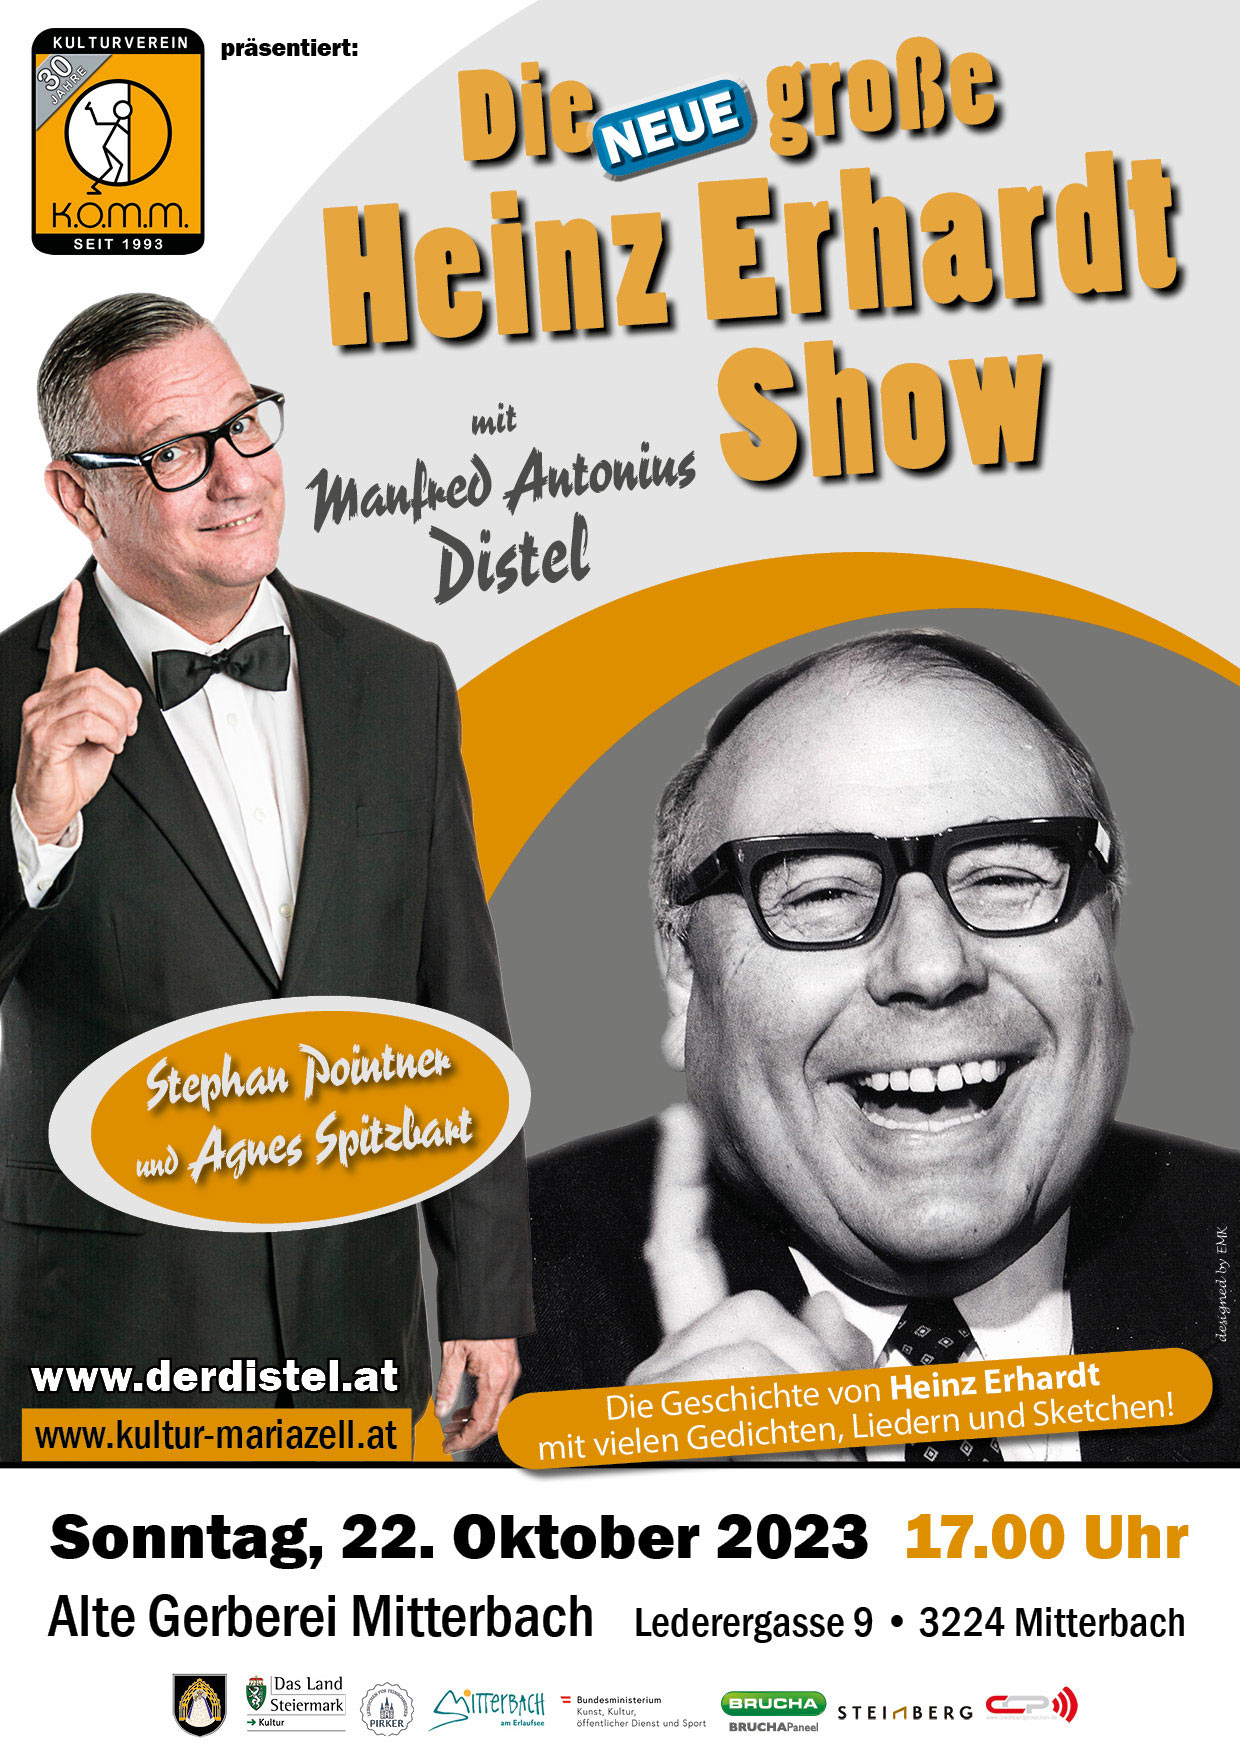 Termintipp: Die neue große Heinz Erhardt Show | Kulturverein K.O.M.M.